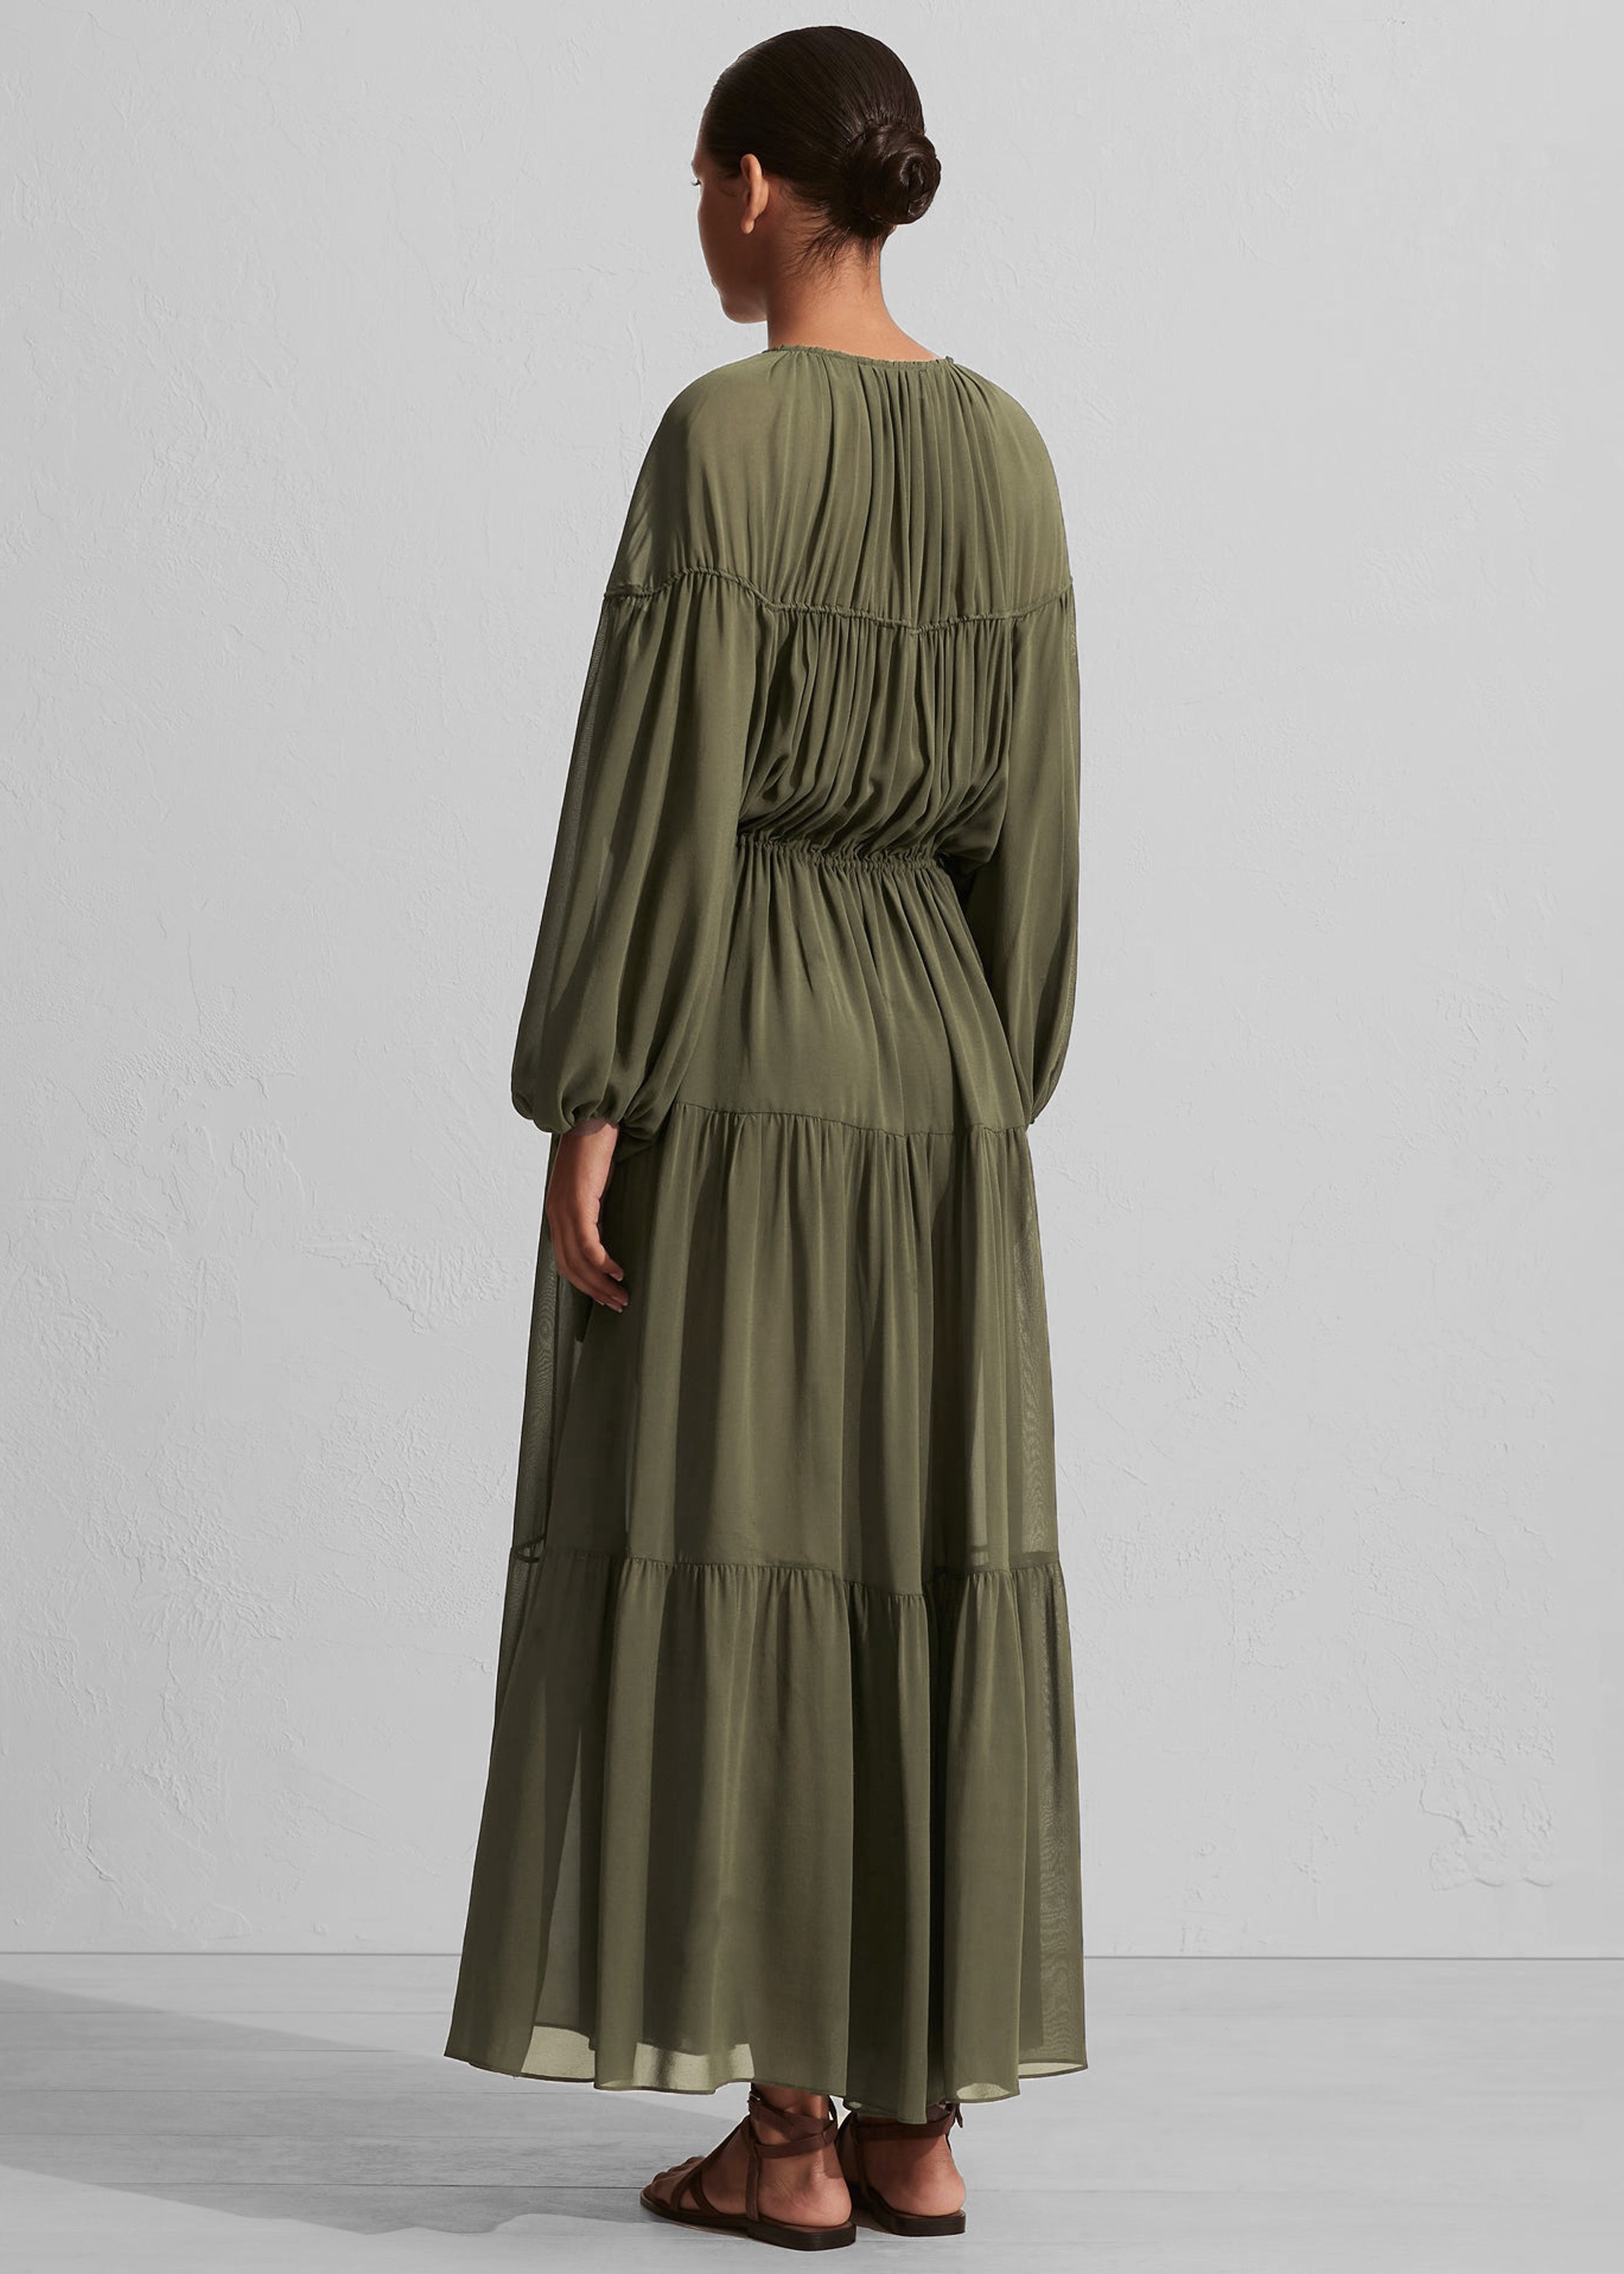 Matteau Voluminous Tiered Tie Dress - Cypress - 9